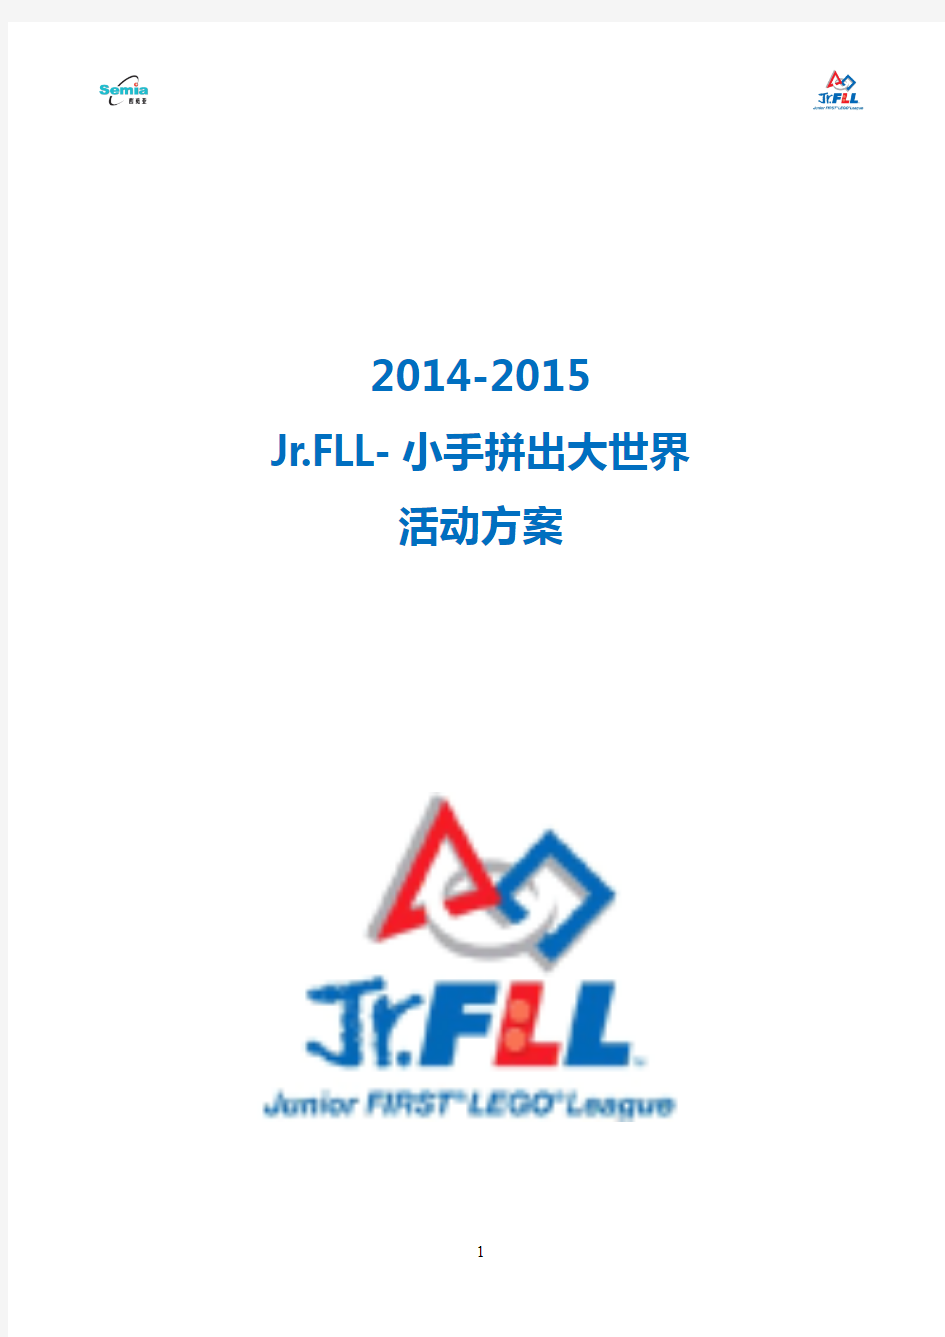 2014-2015jr.fll创意搭建活动规则